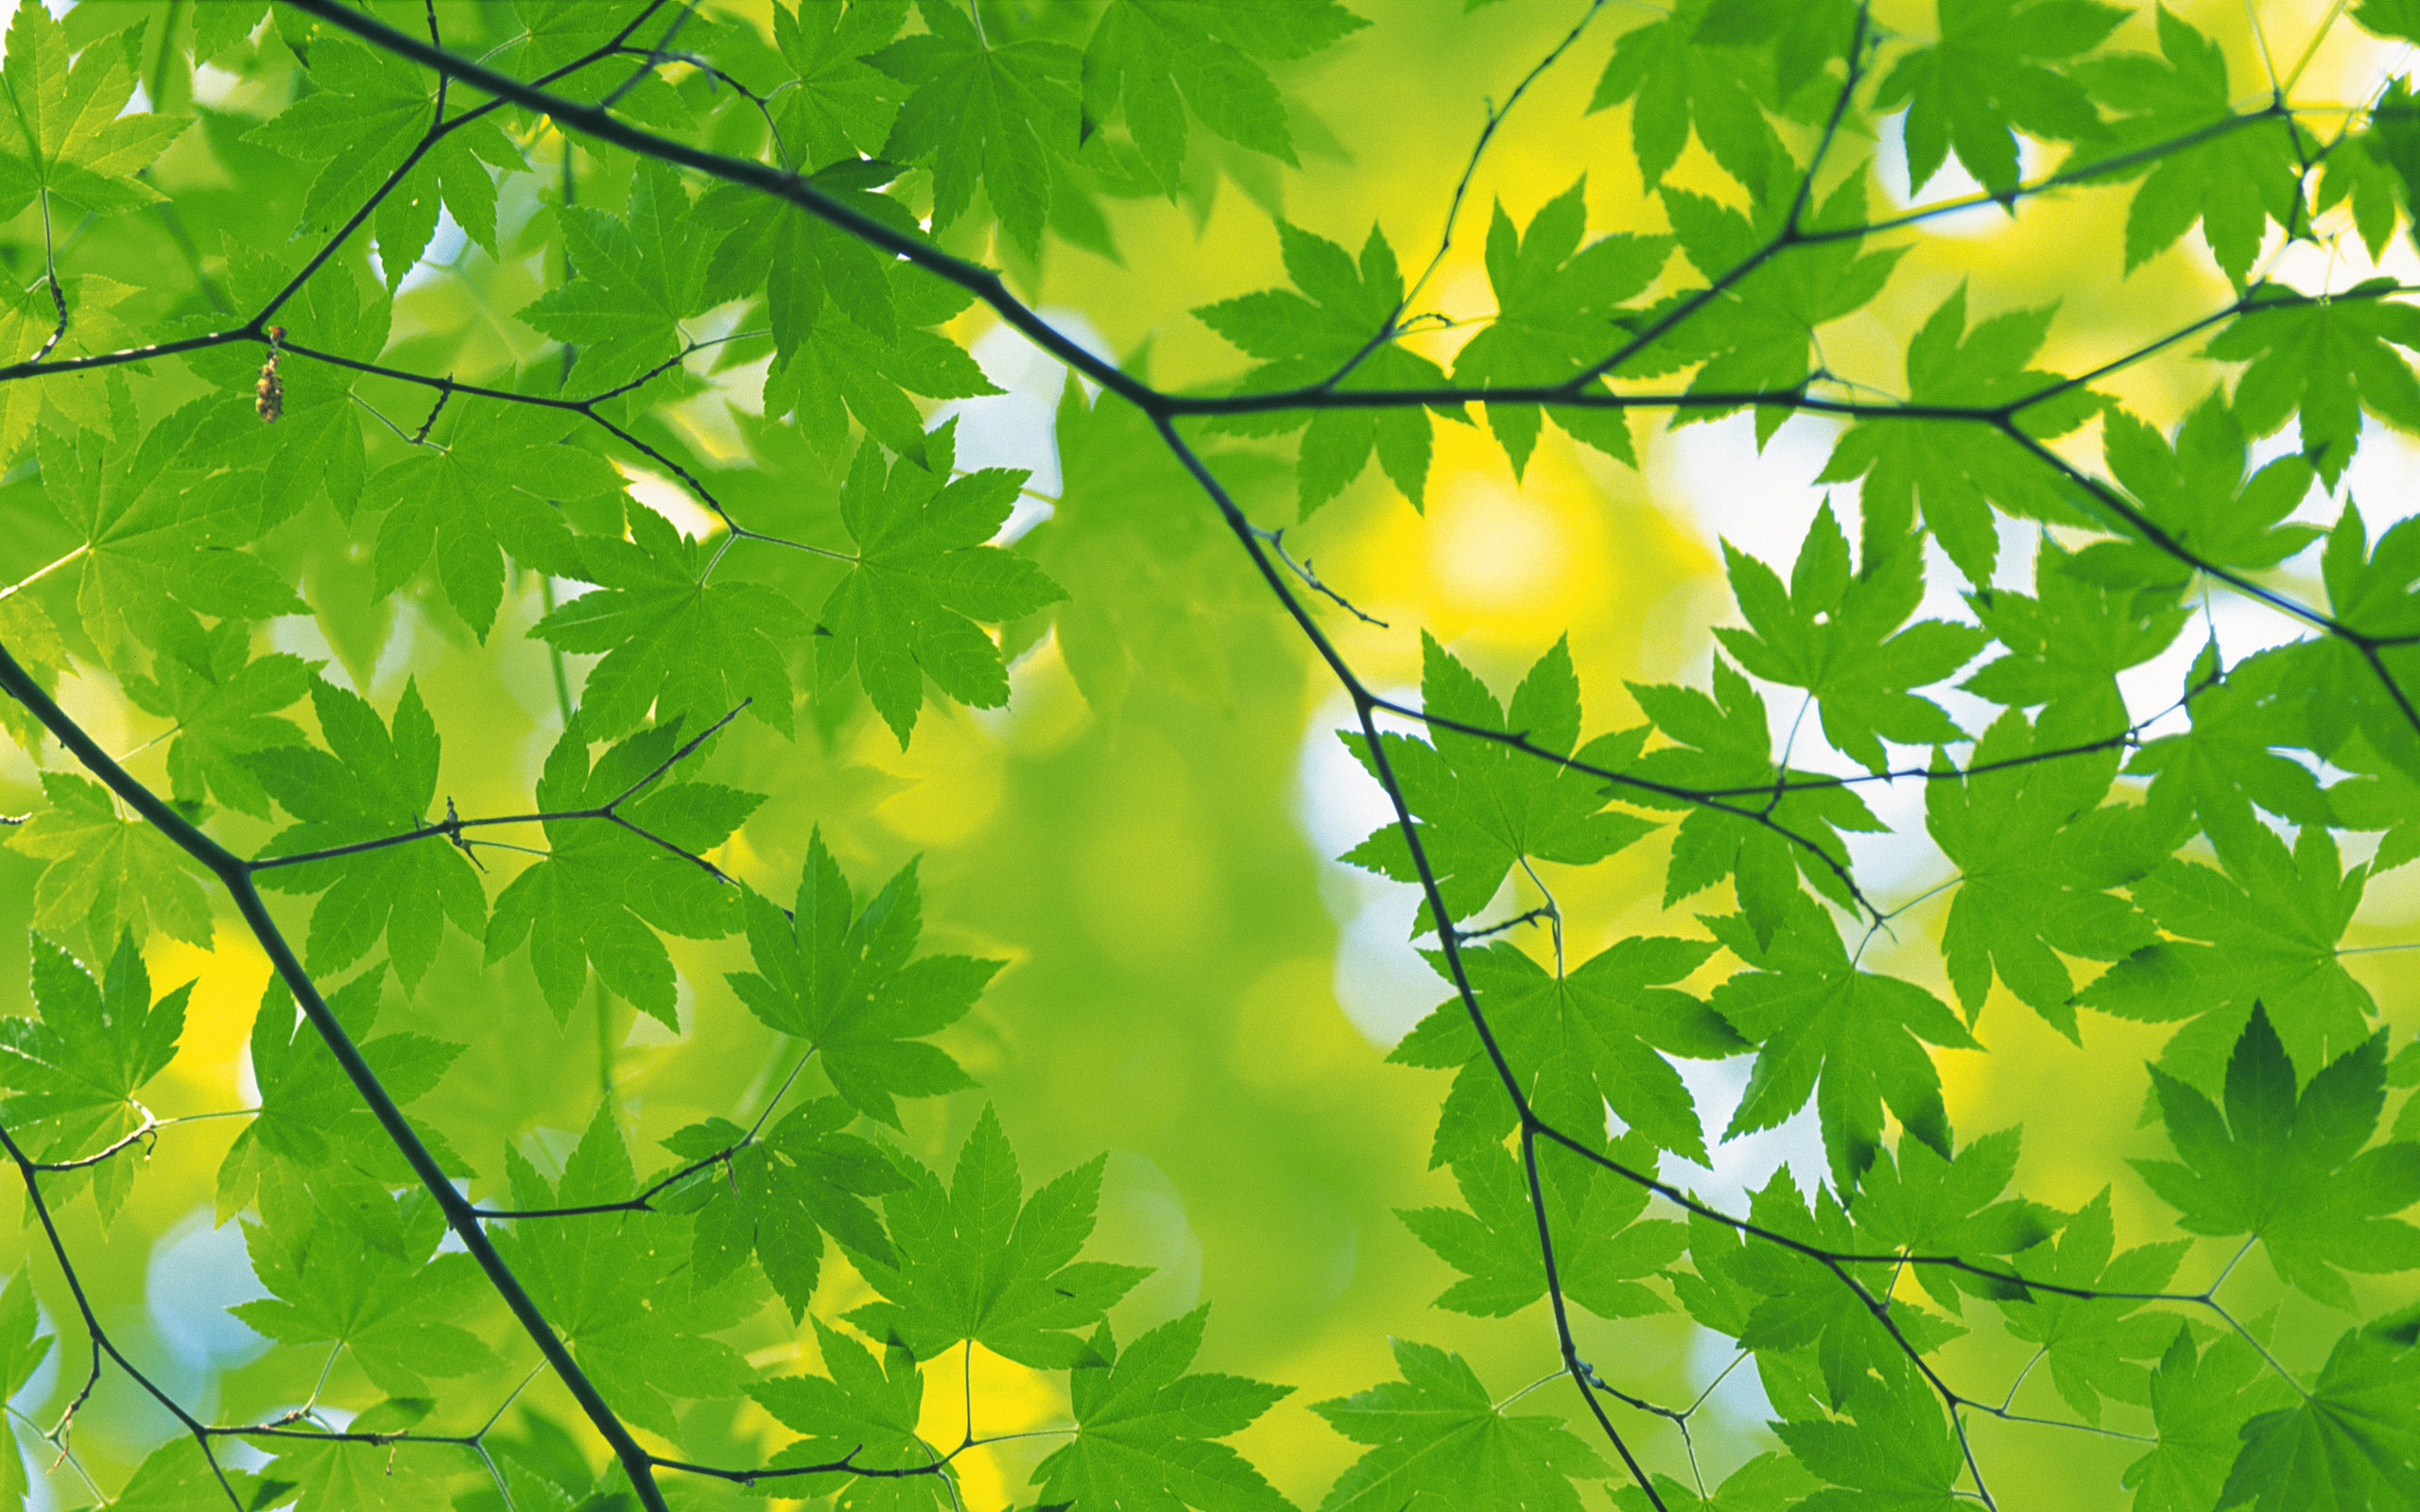 beautiful green leaf image